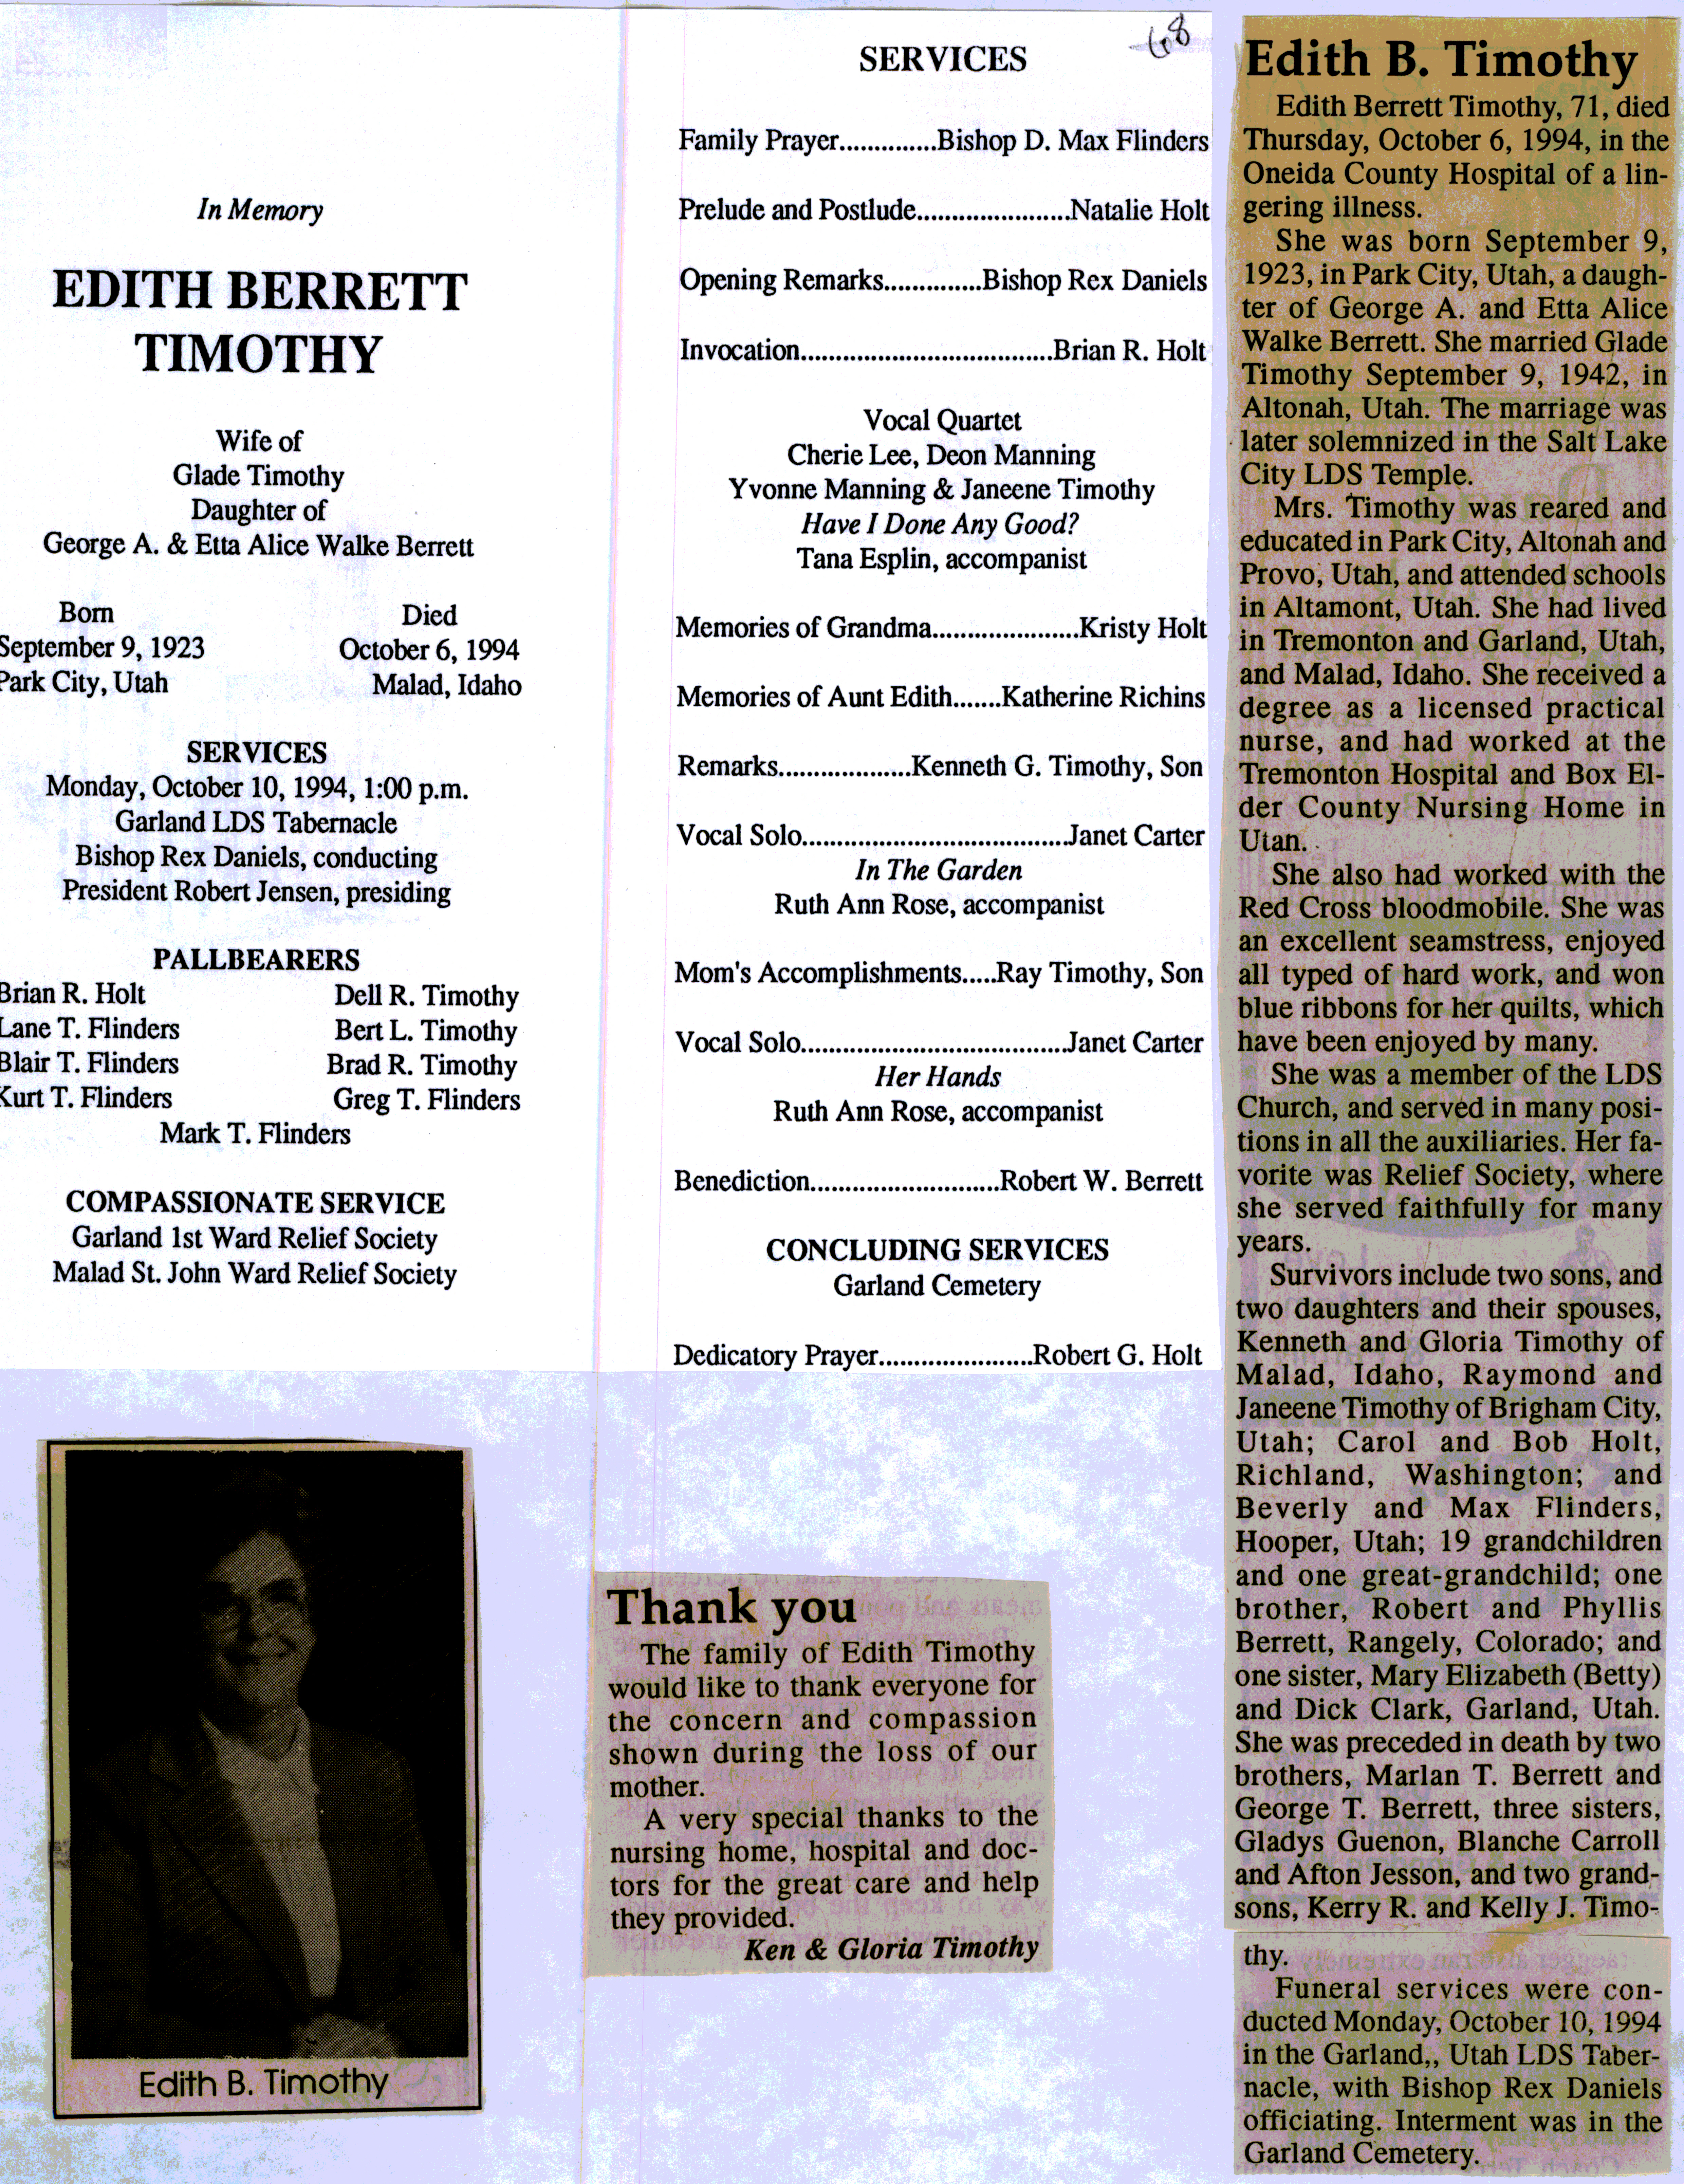 Edith Berrett Timothy obit and program